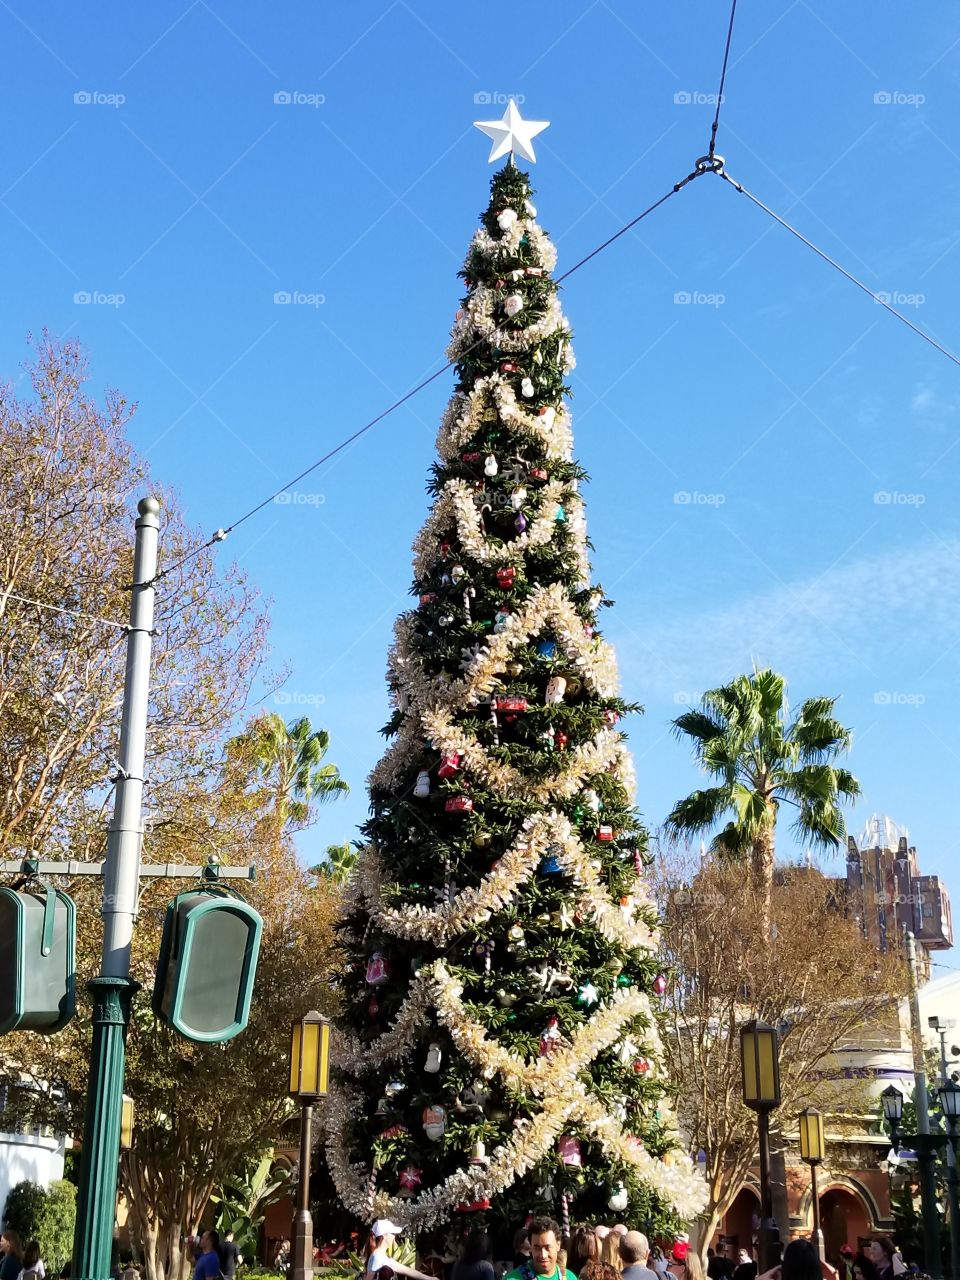 Tree, Christmas, Sky, Traditional, Travel